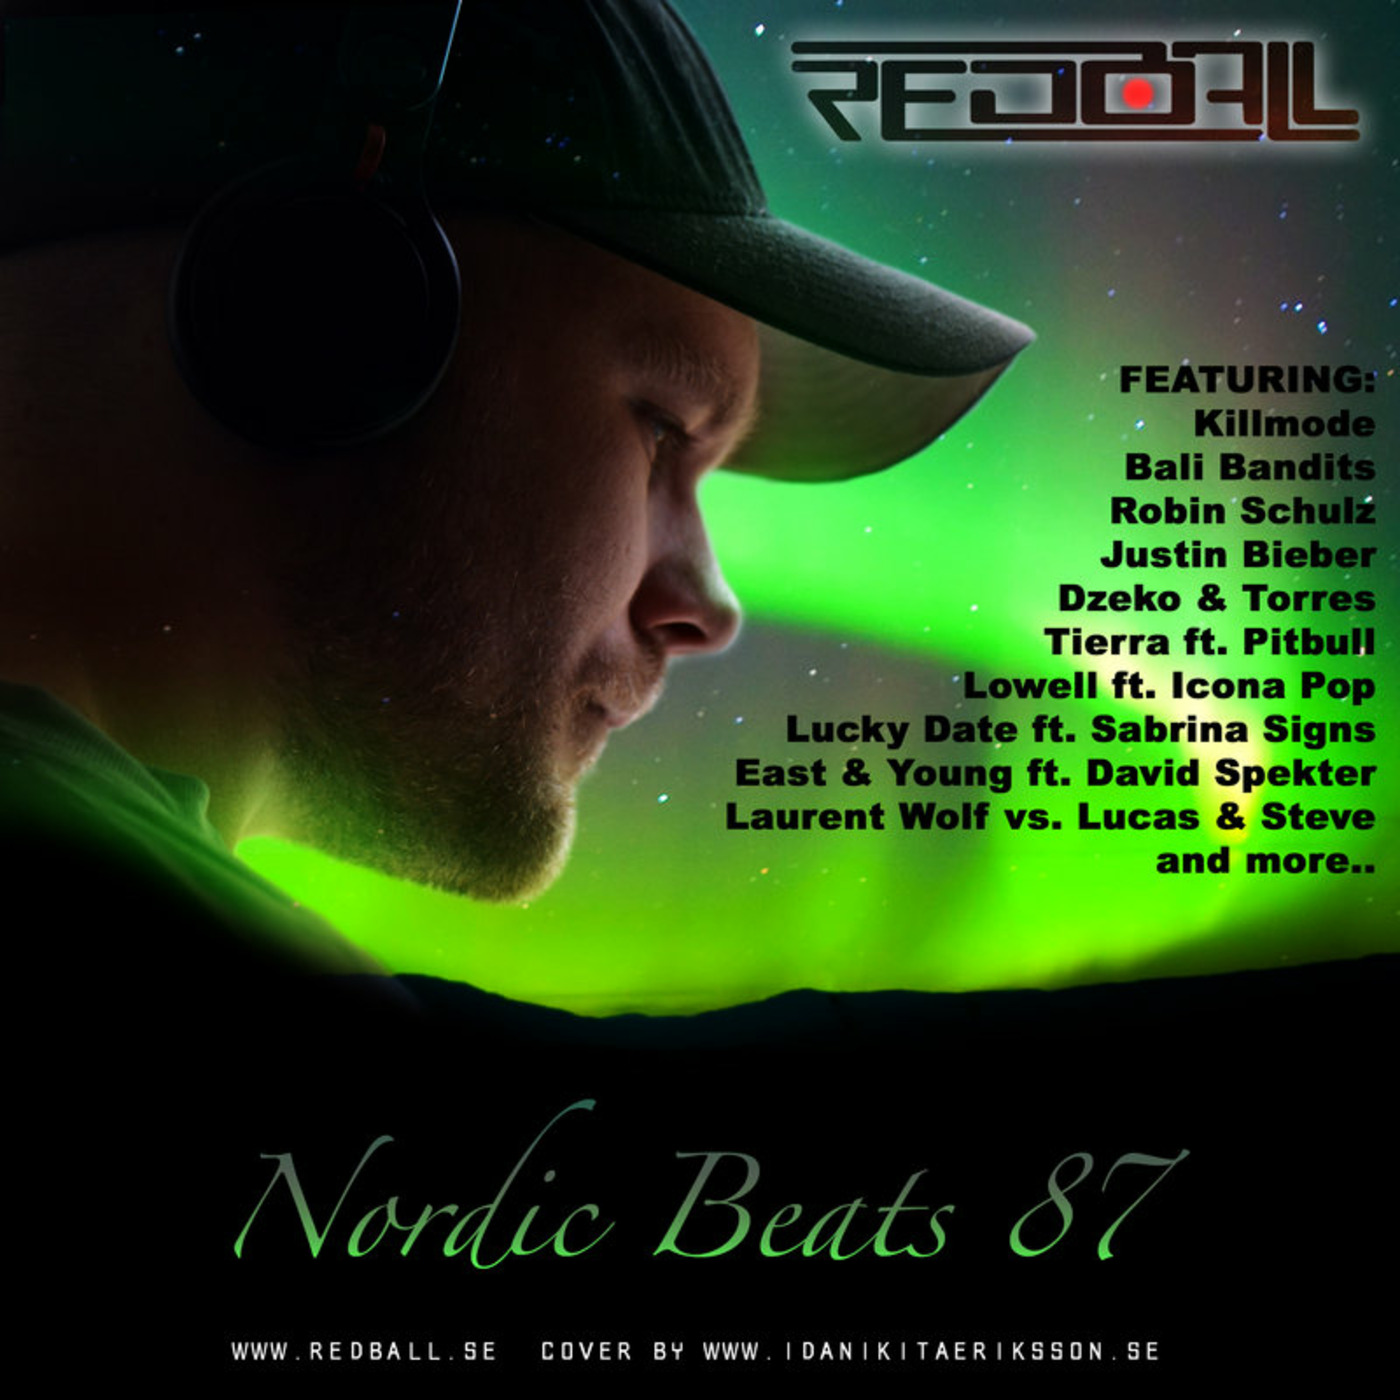 Nordic Beats 87 by redball